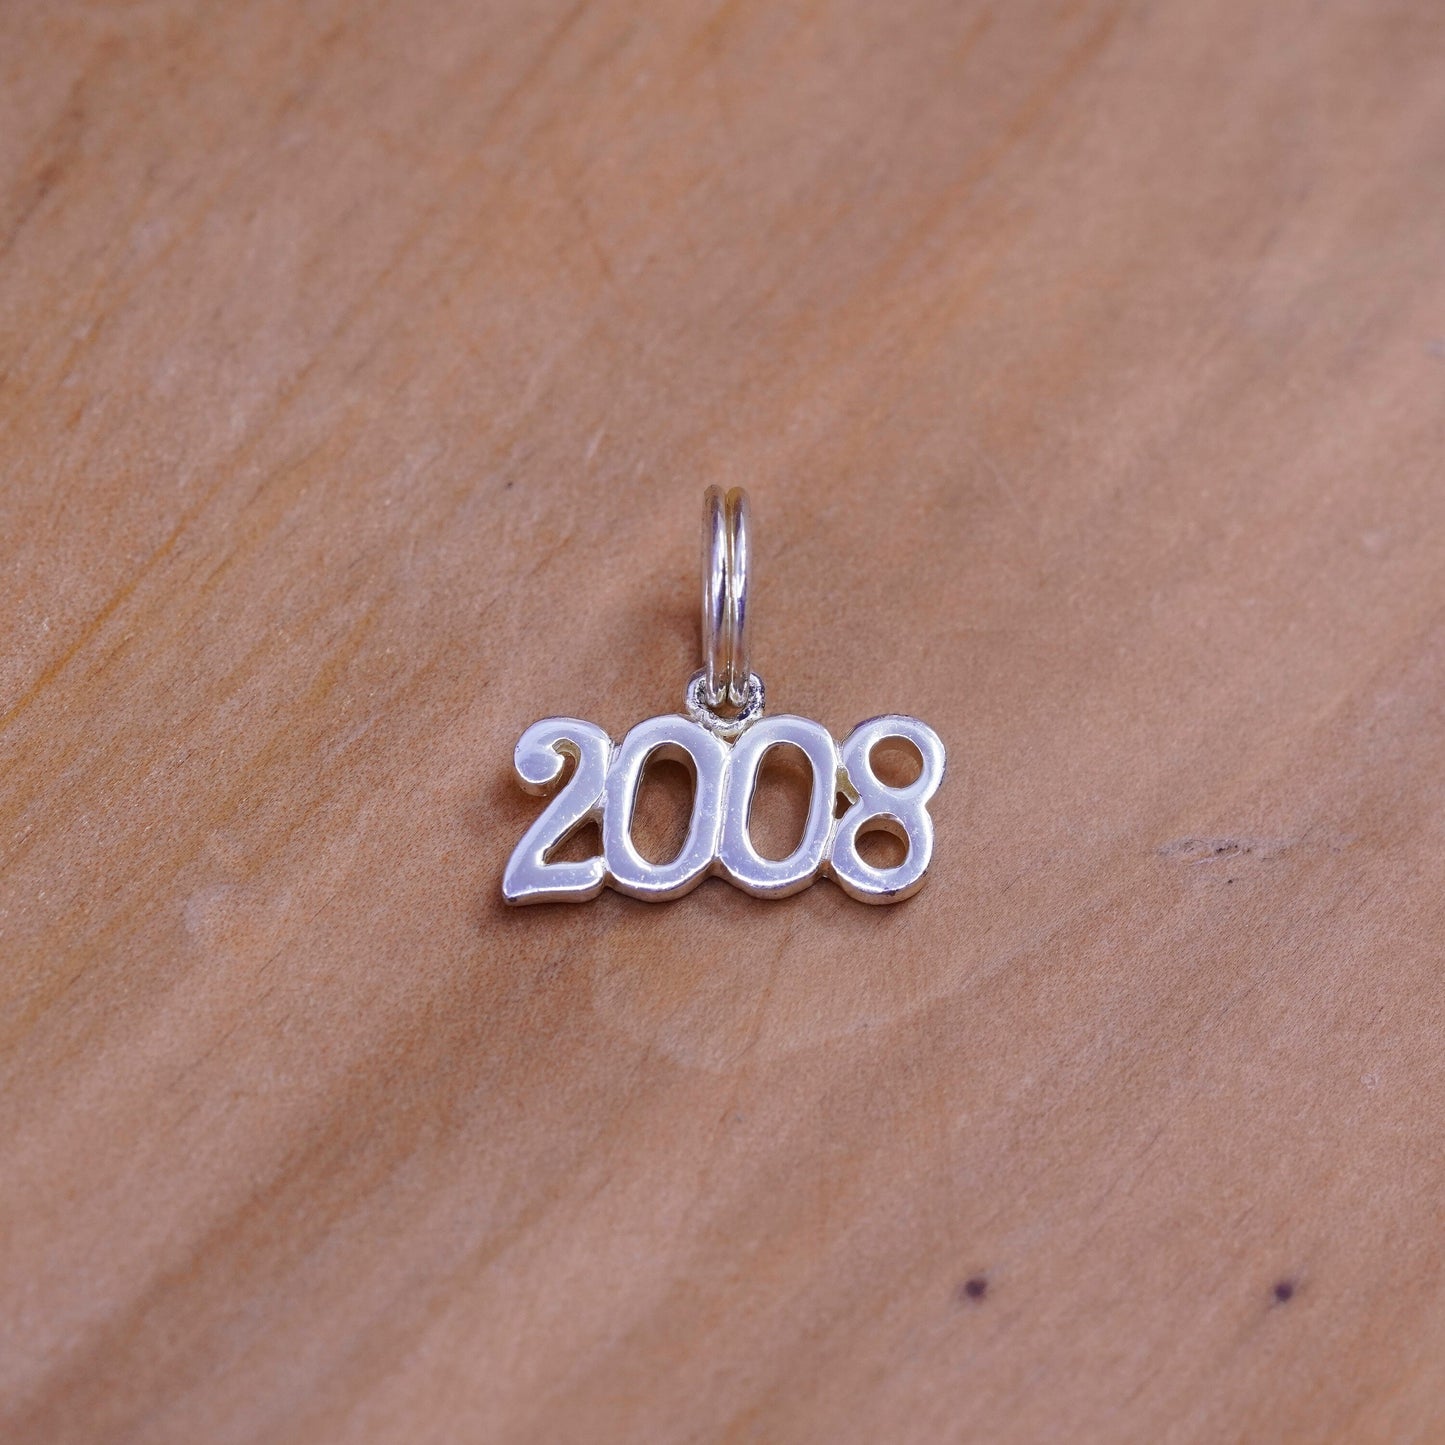 Vintage sterling silver handmade pendant, 925 2008 charm